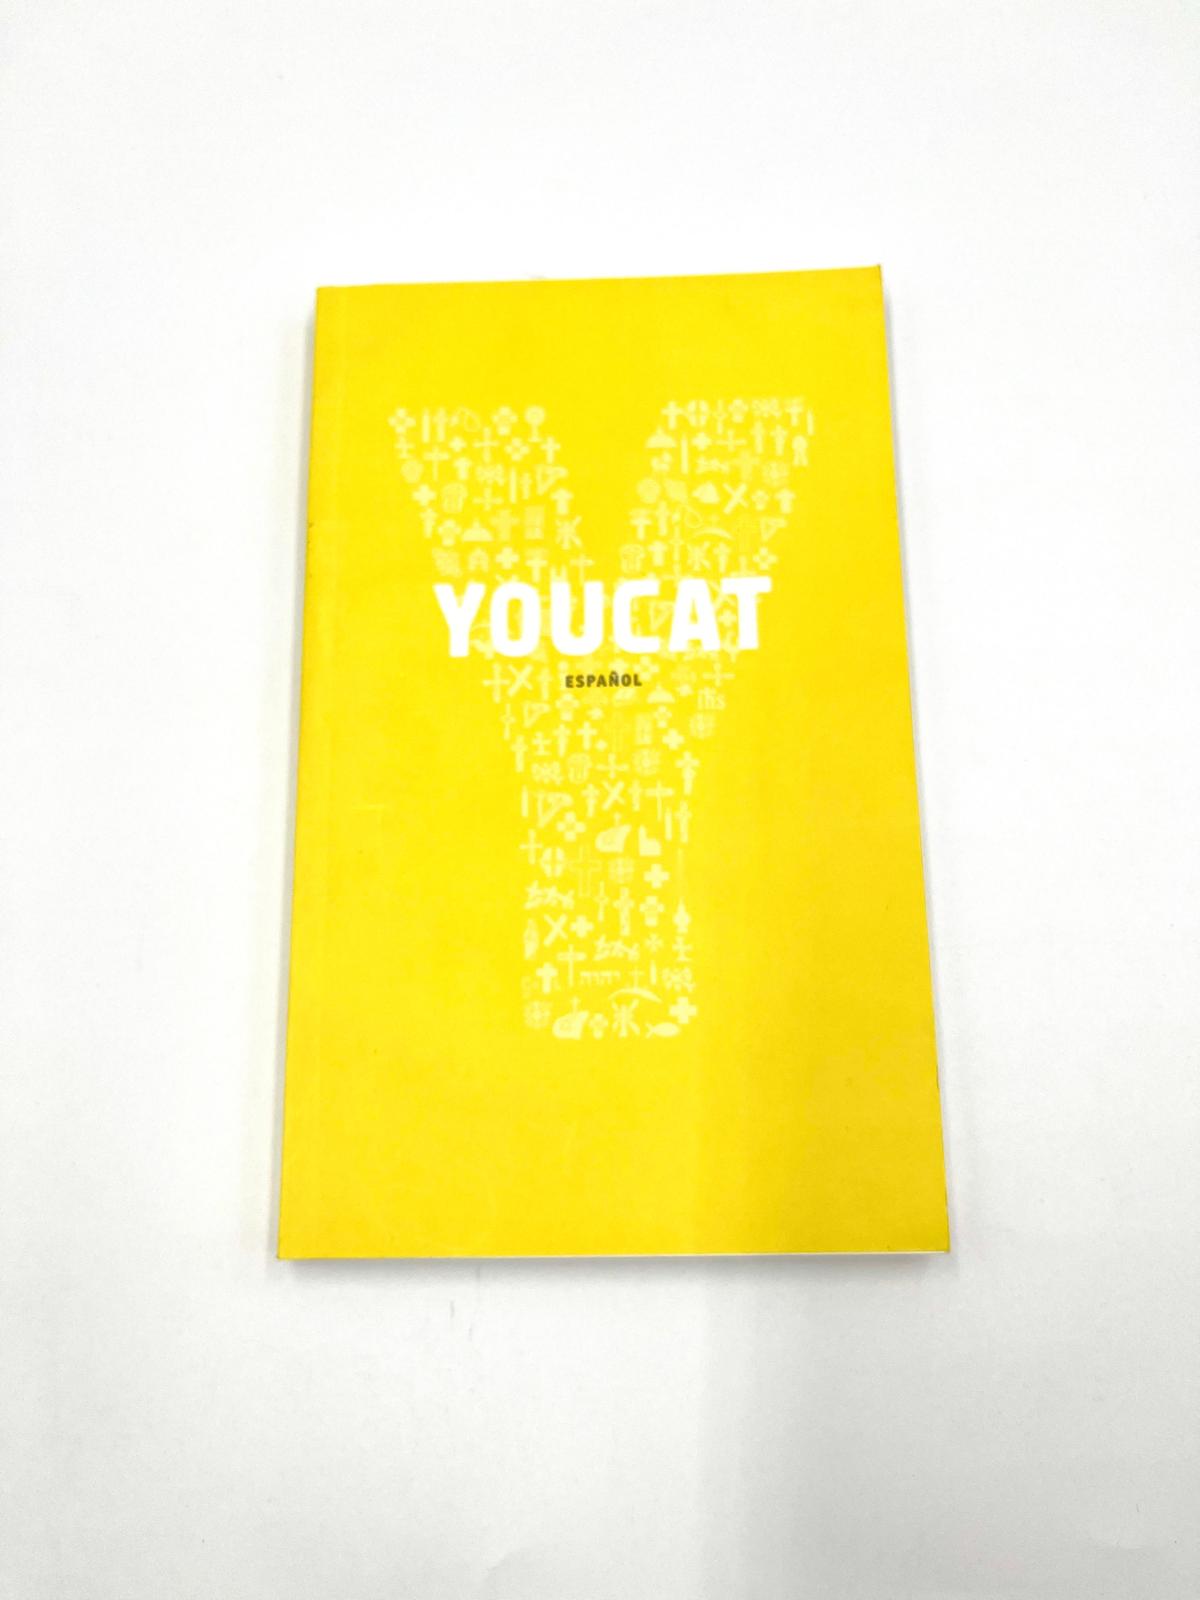 Youcat  (Espanol)